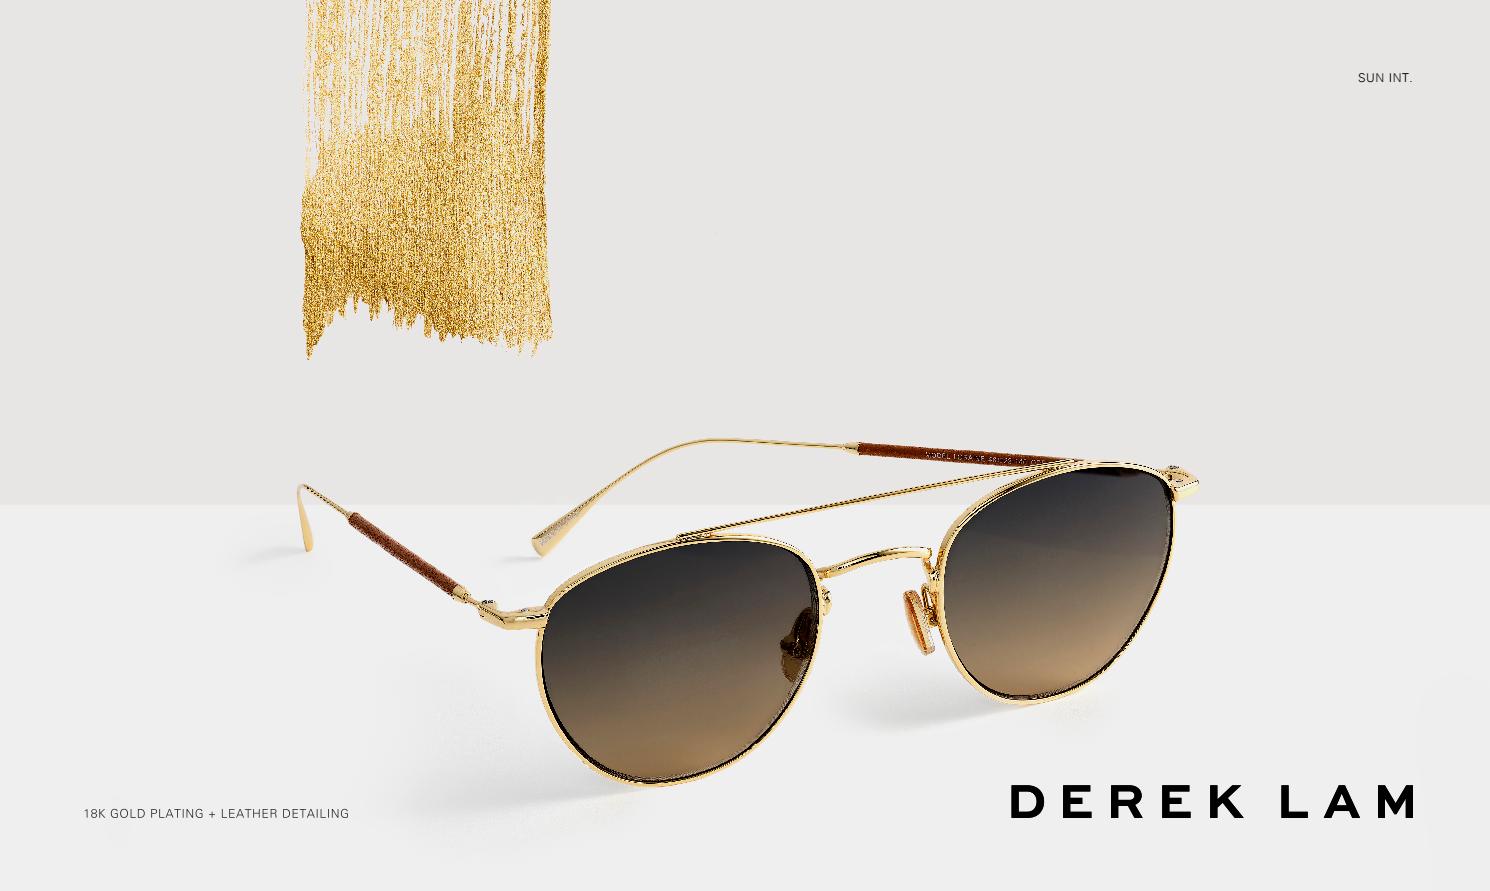 Derek Lam sunglasses